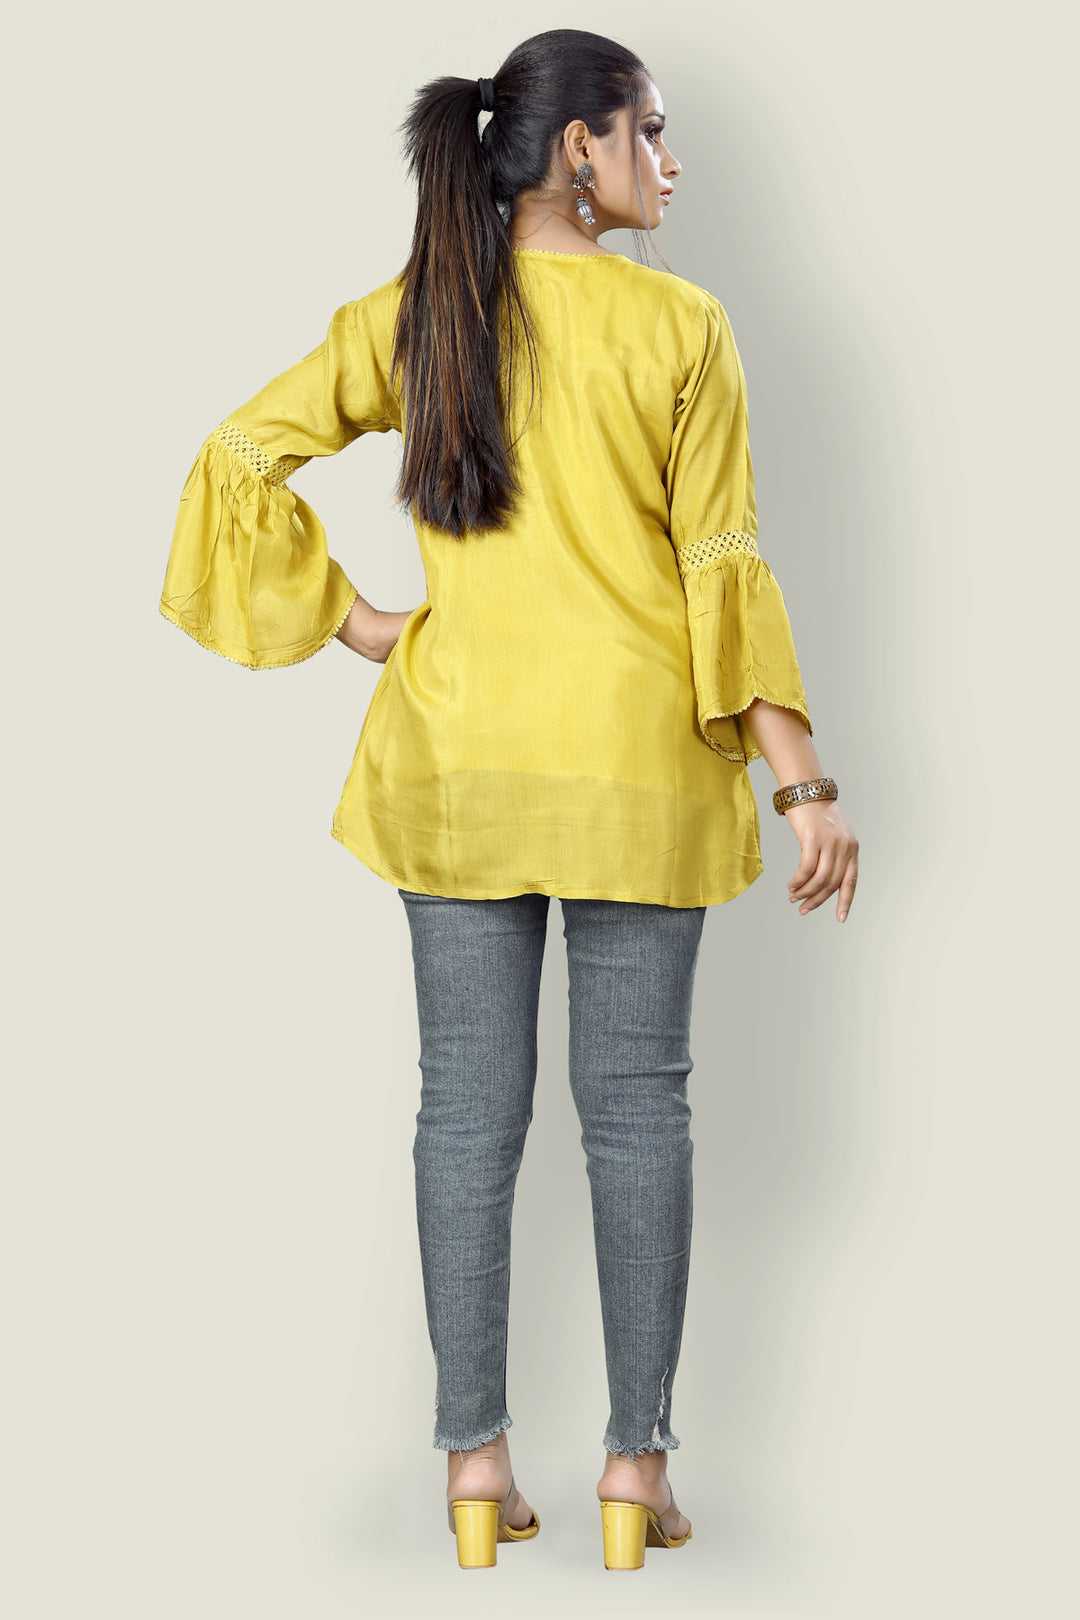 Buy Designer Lamen Yellow Top tunic